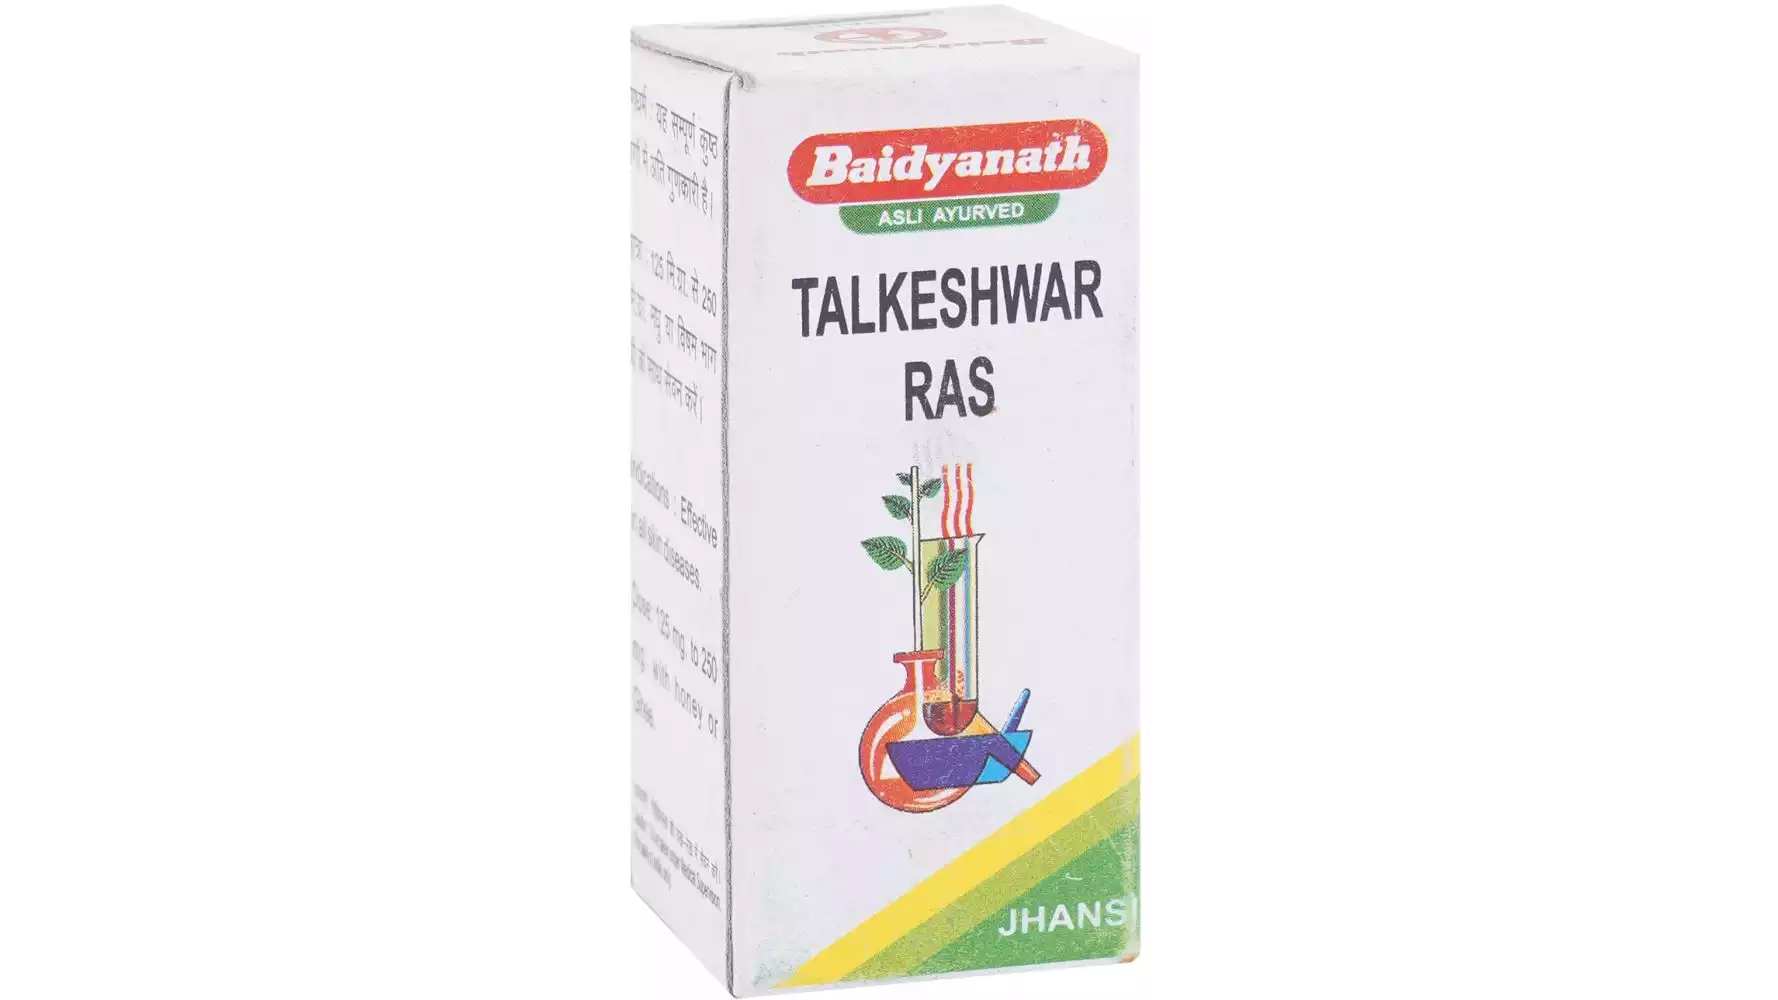 Baidyanath Talkeshwar Ras (5g)